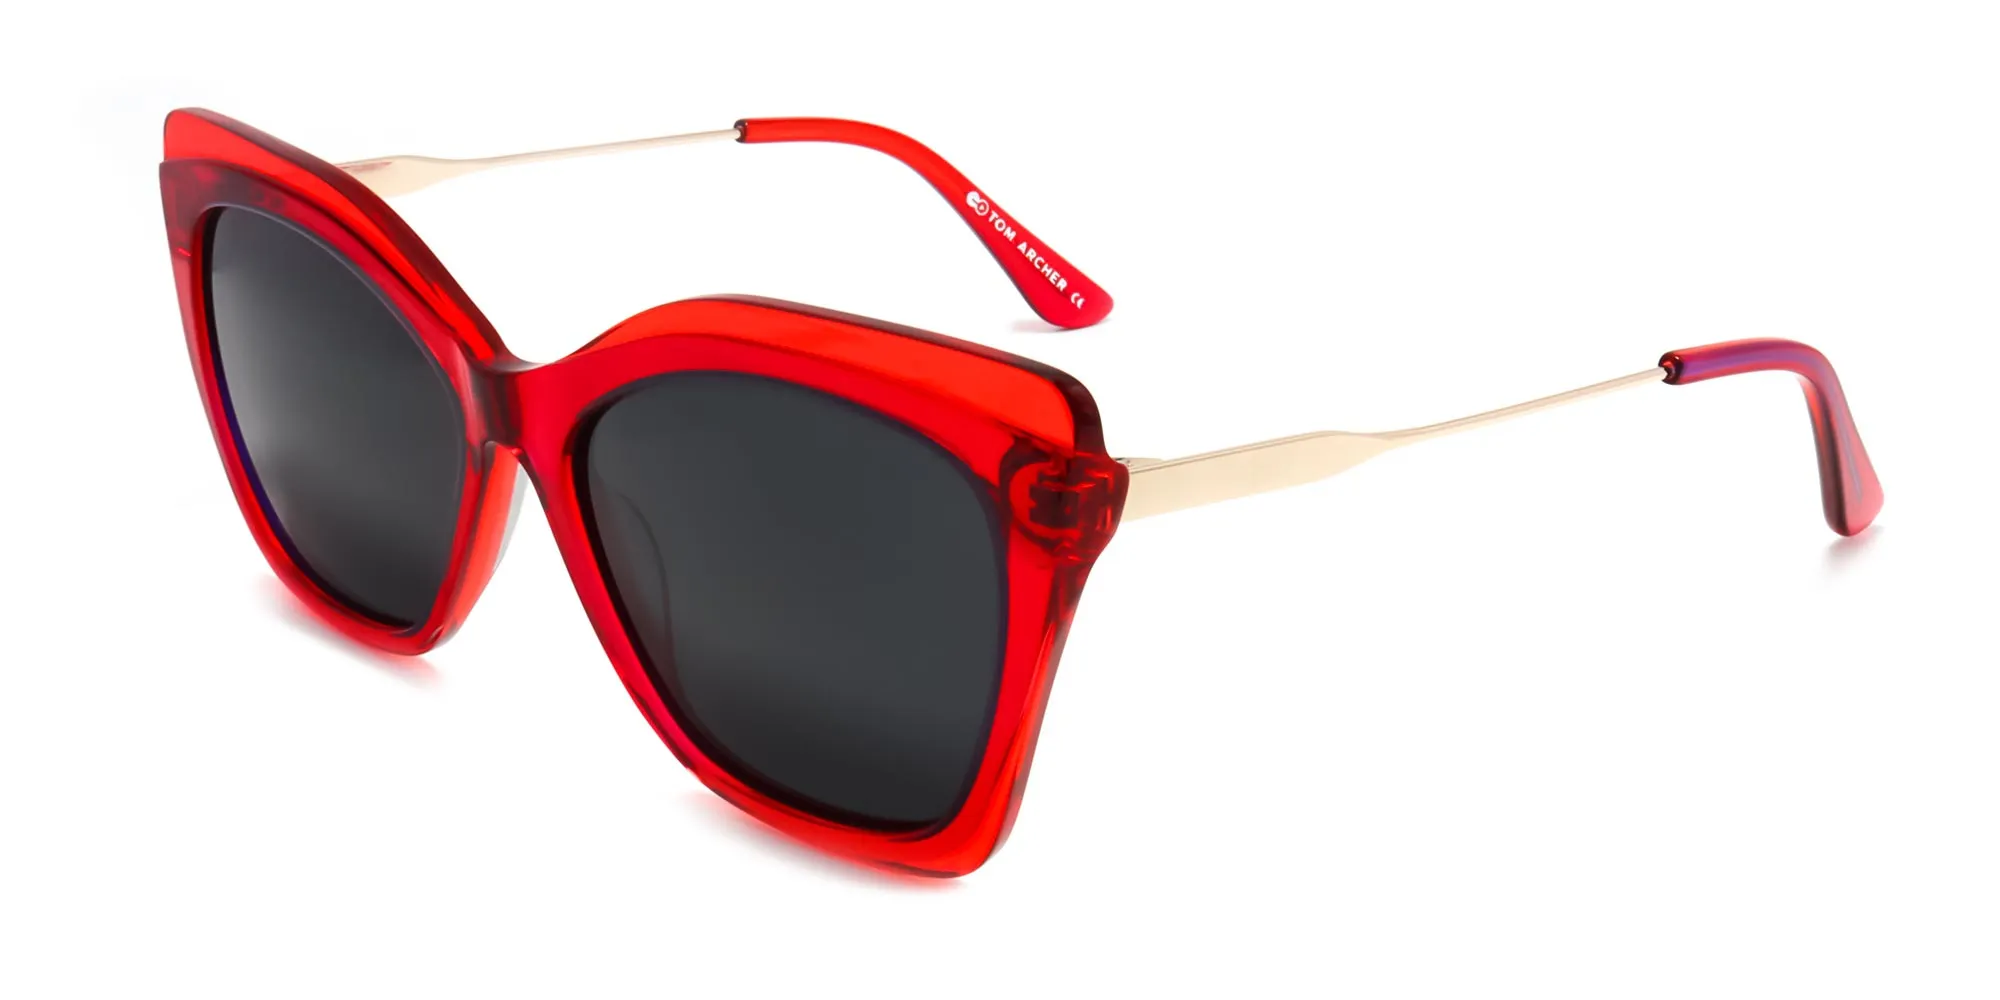 Red Frame Sunglasses